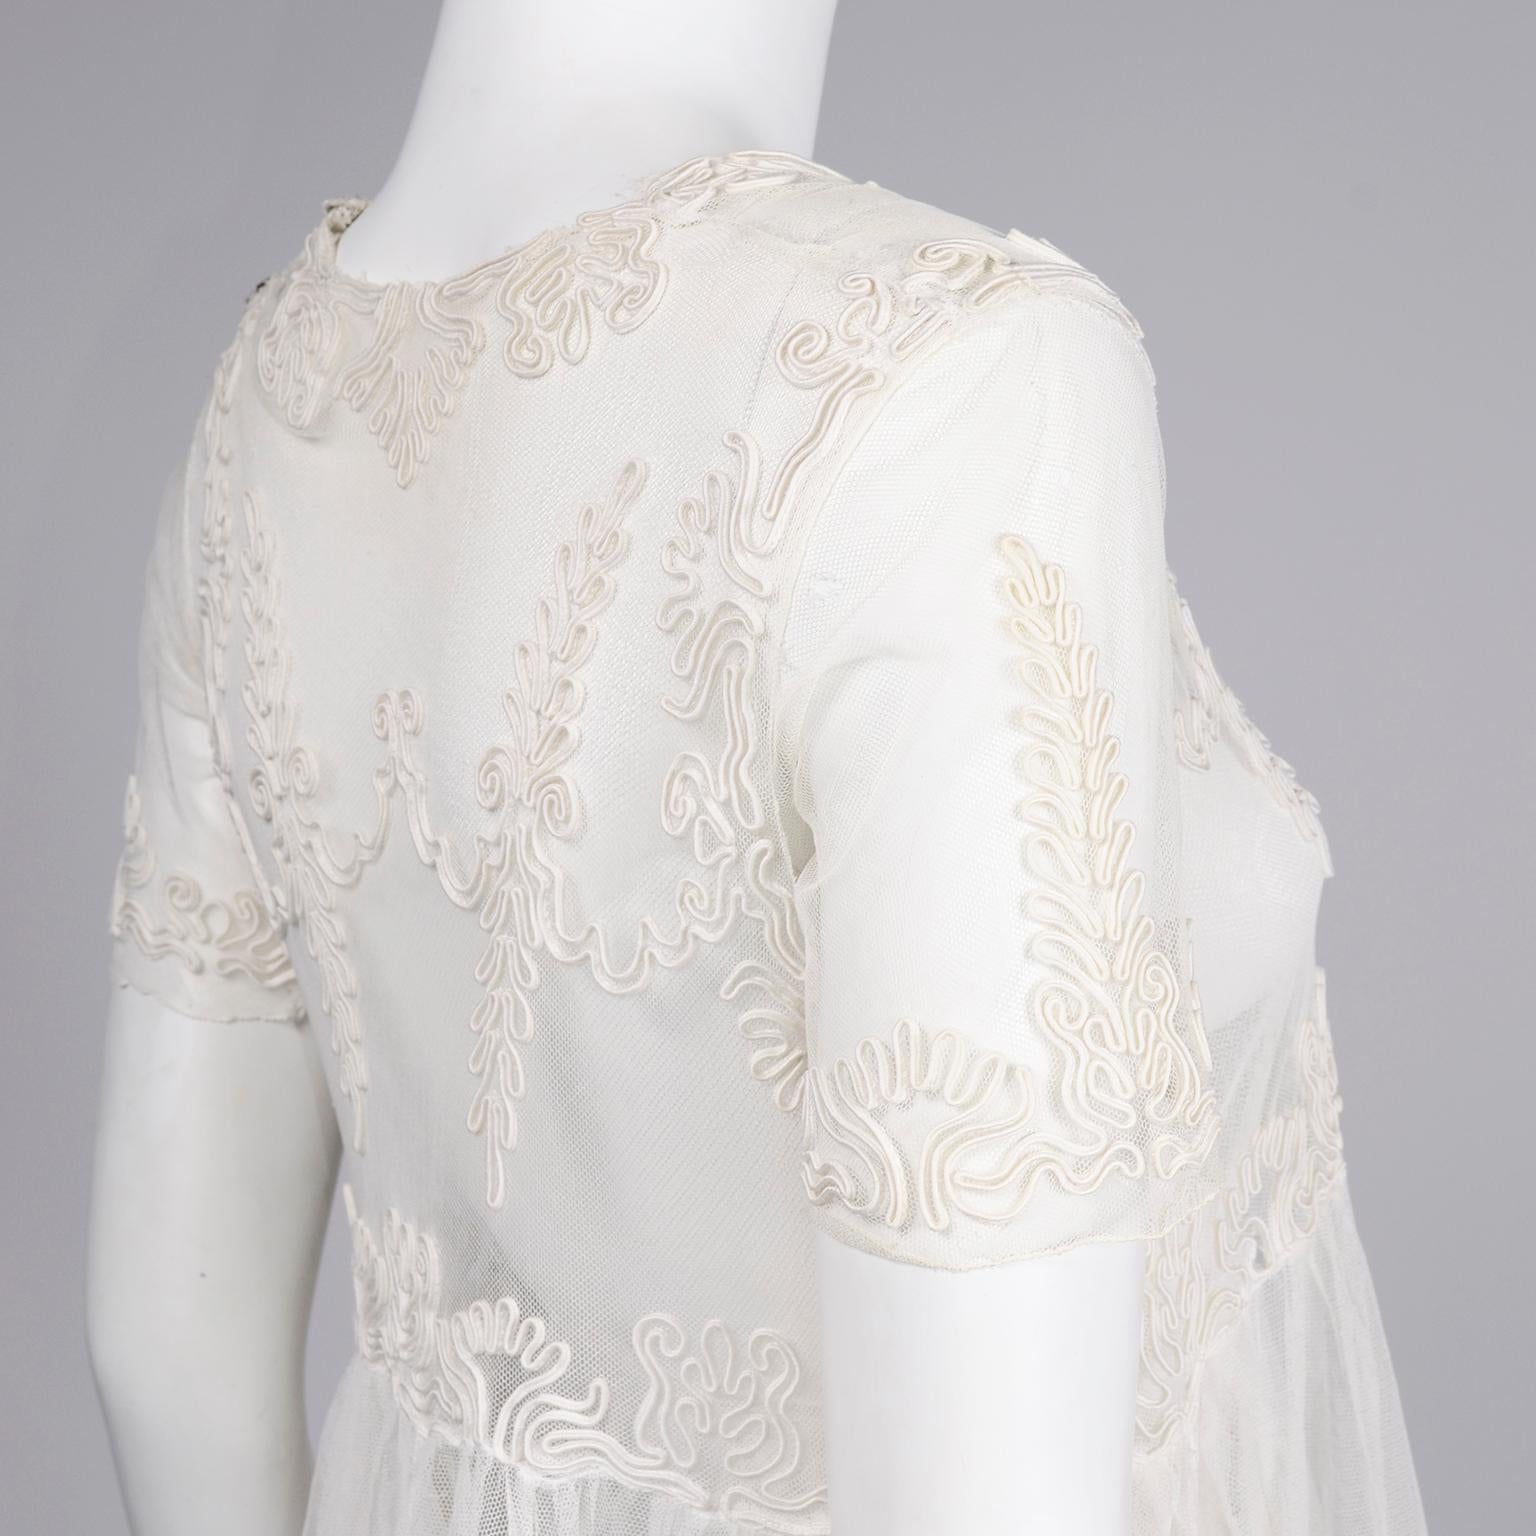 Antique Edwardian 1910s Vintage Ivory Net Tulle Dress W Soutache Embroidery Trim For Sale 7